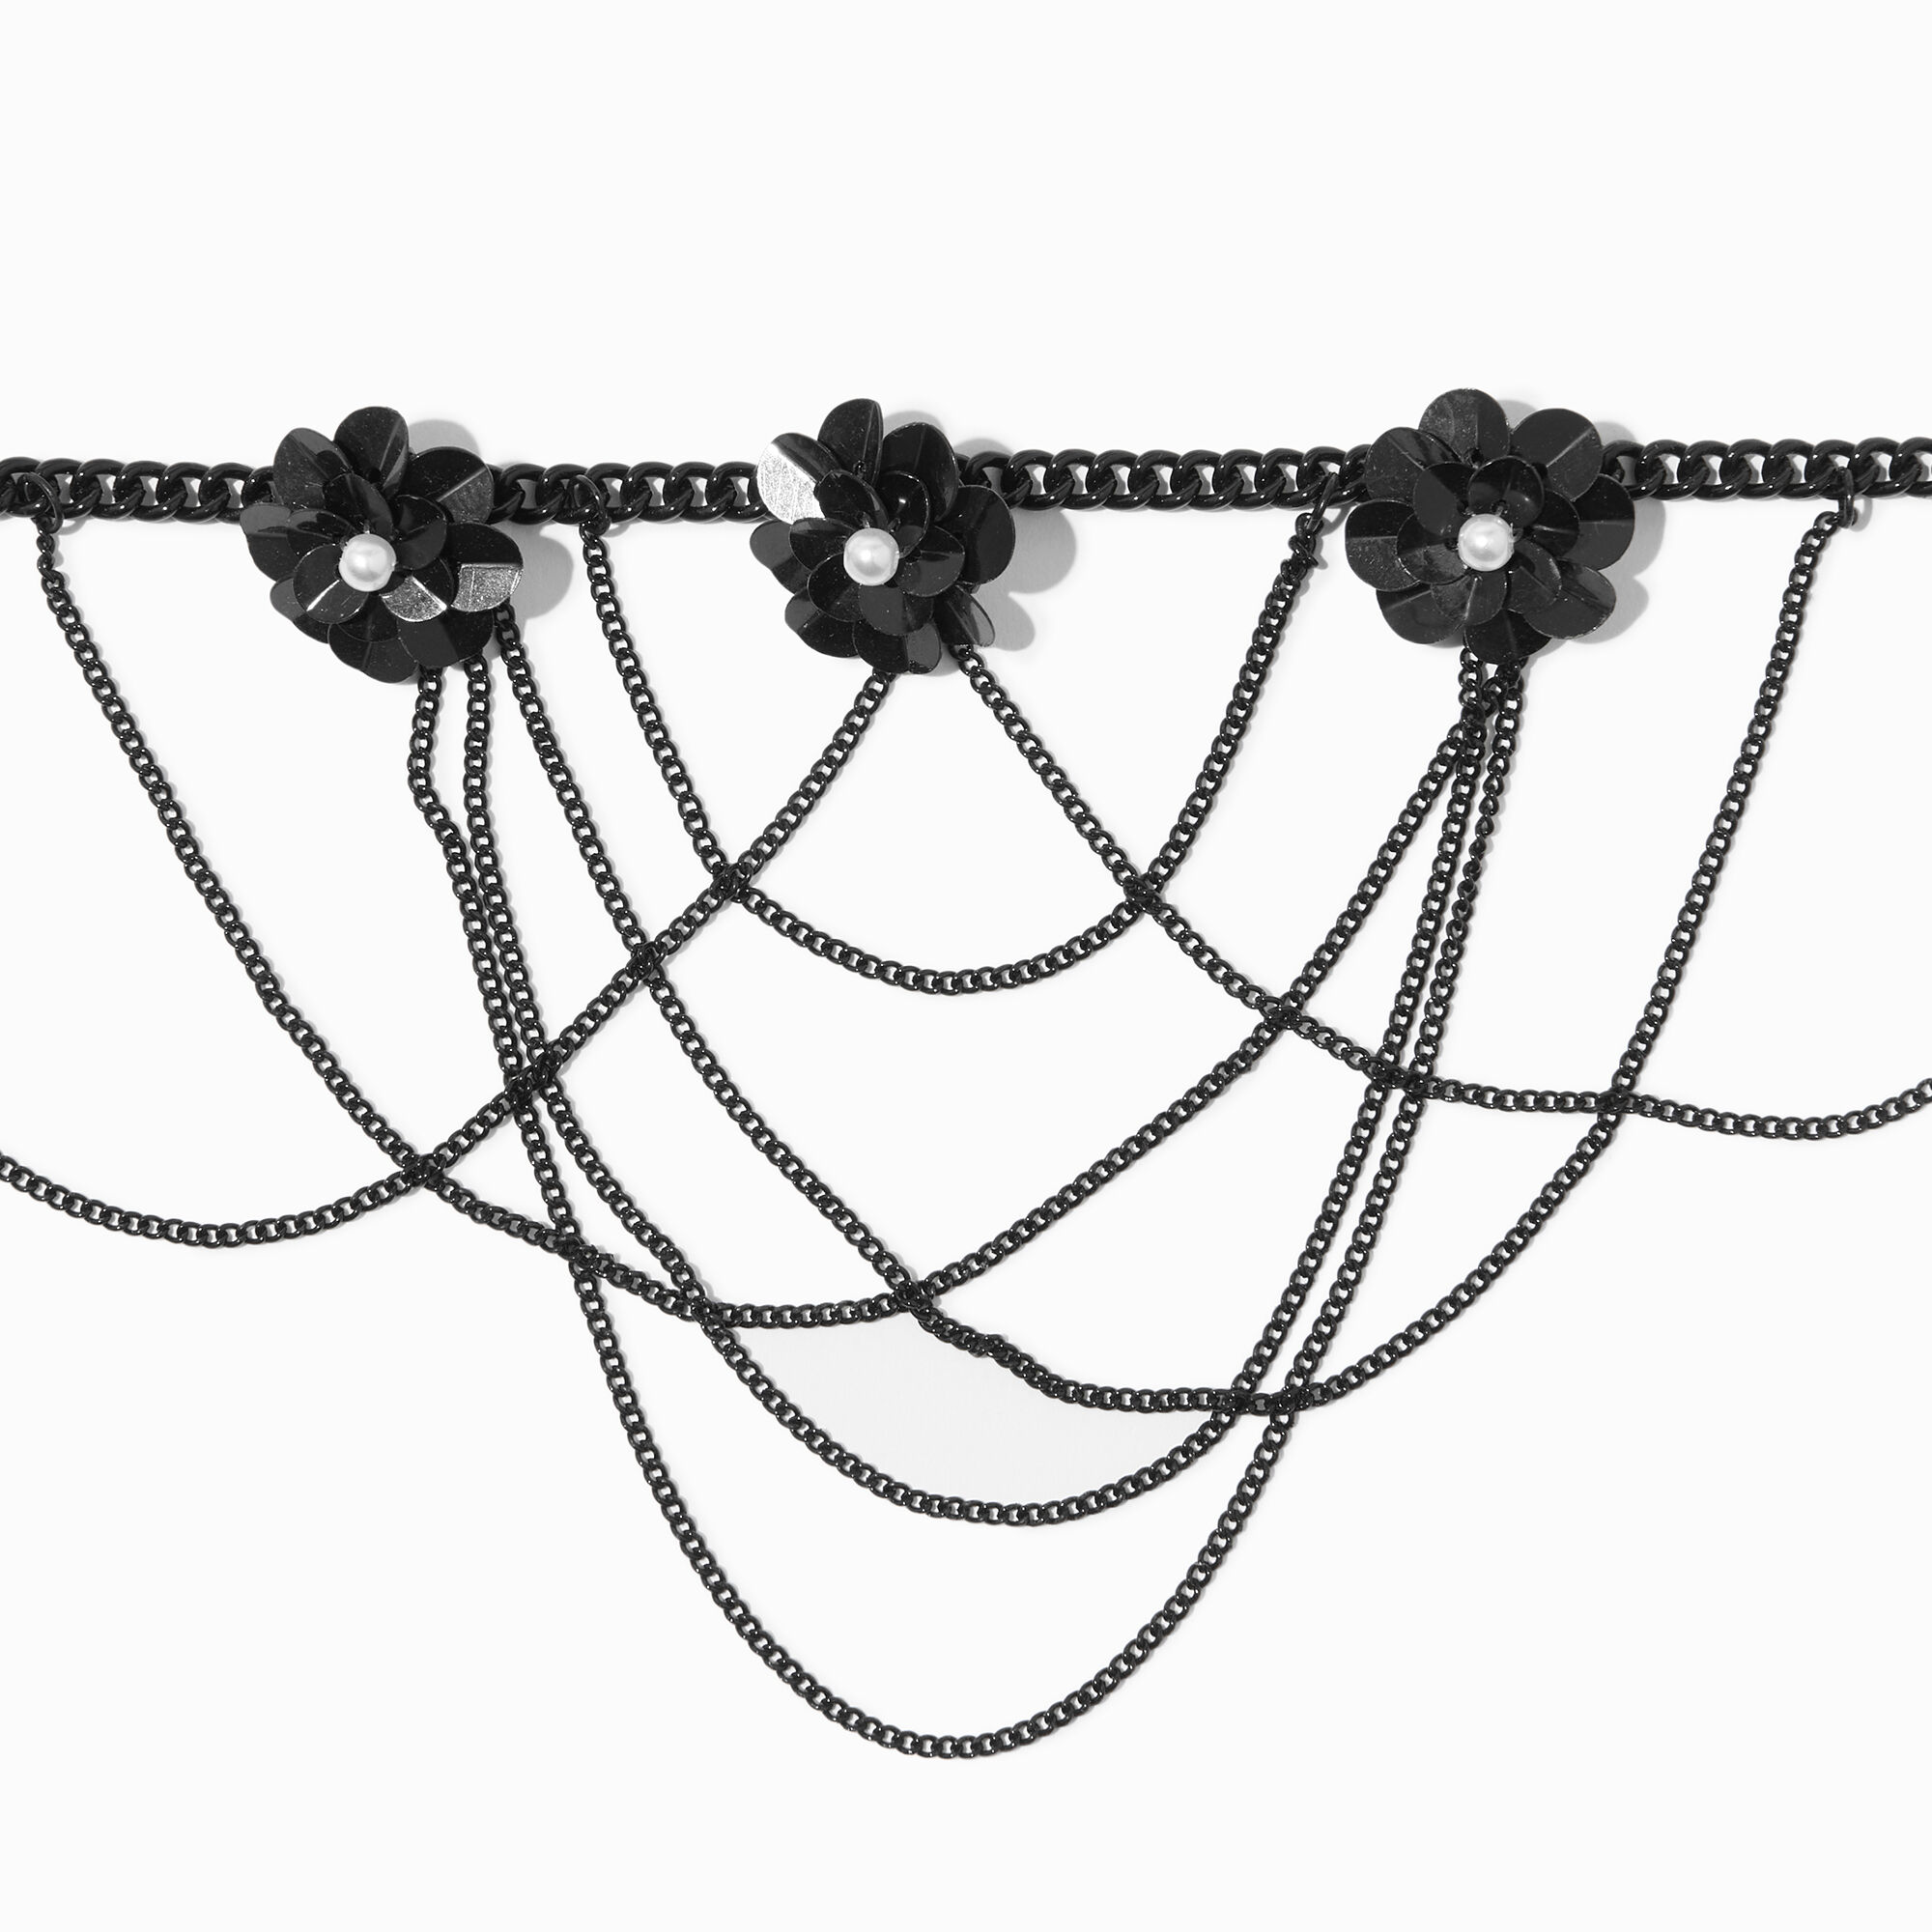 View Claires Sequin Flower Chain Drape Choker Necklace Black information